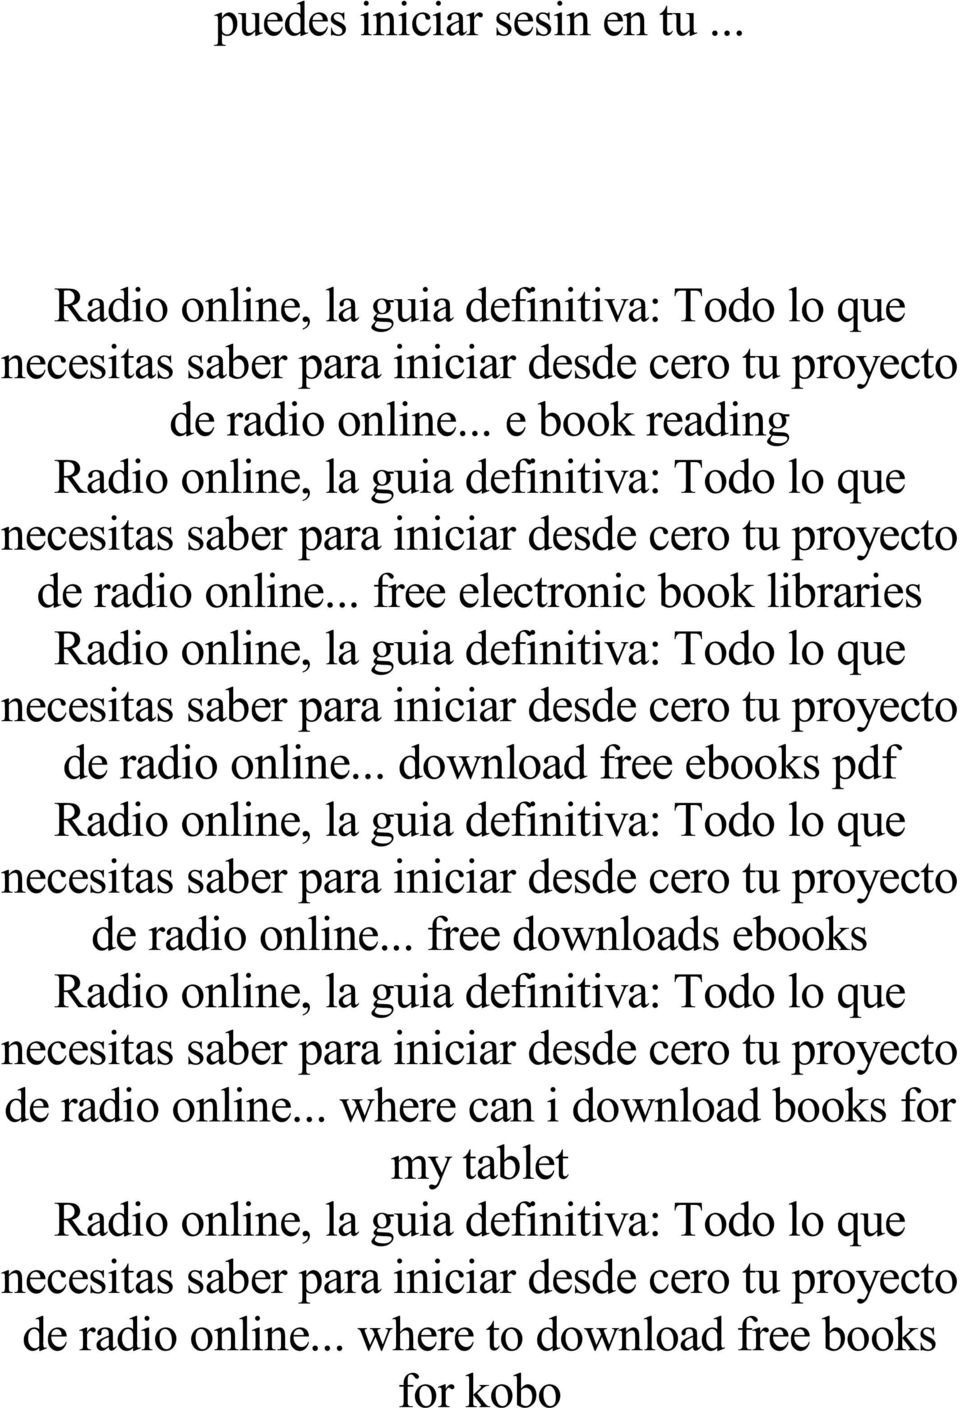 .. download free ebooks pdf de radio online.